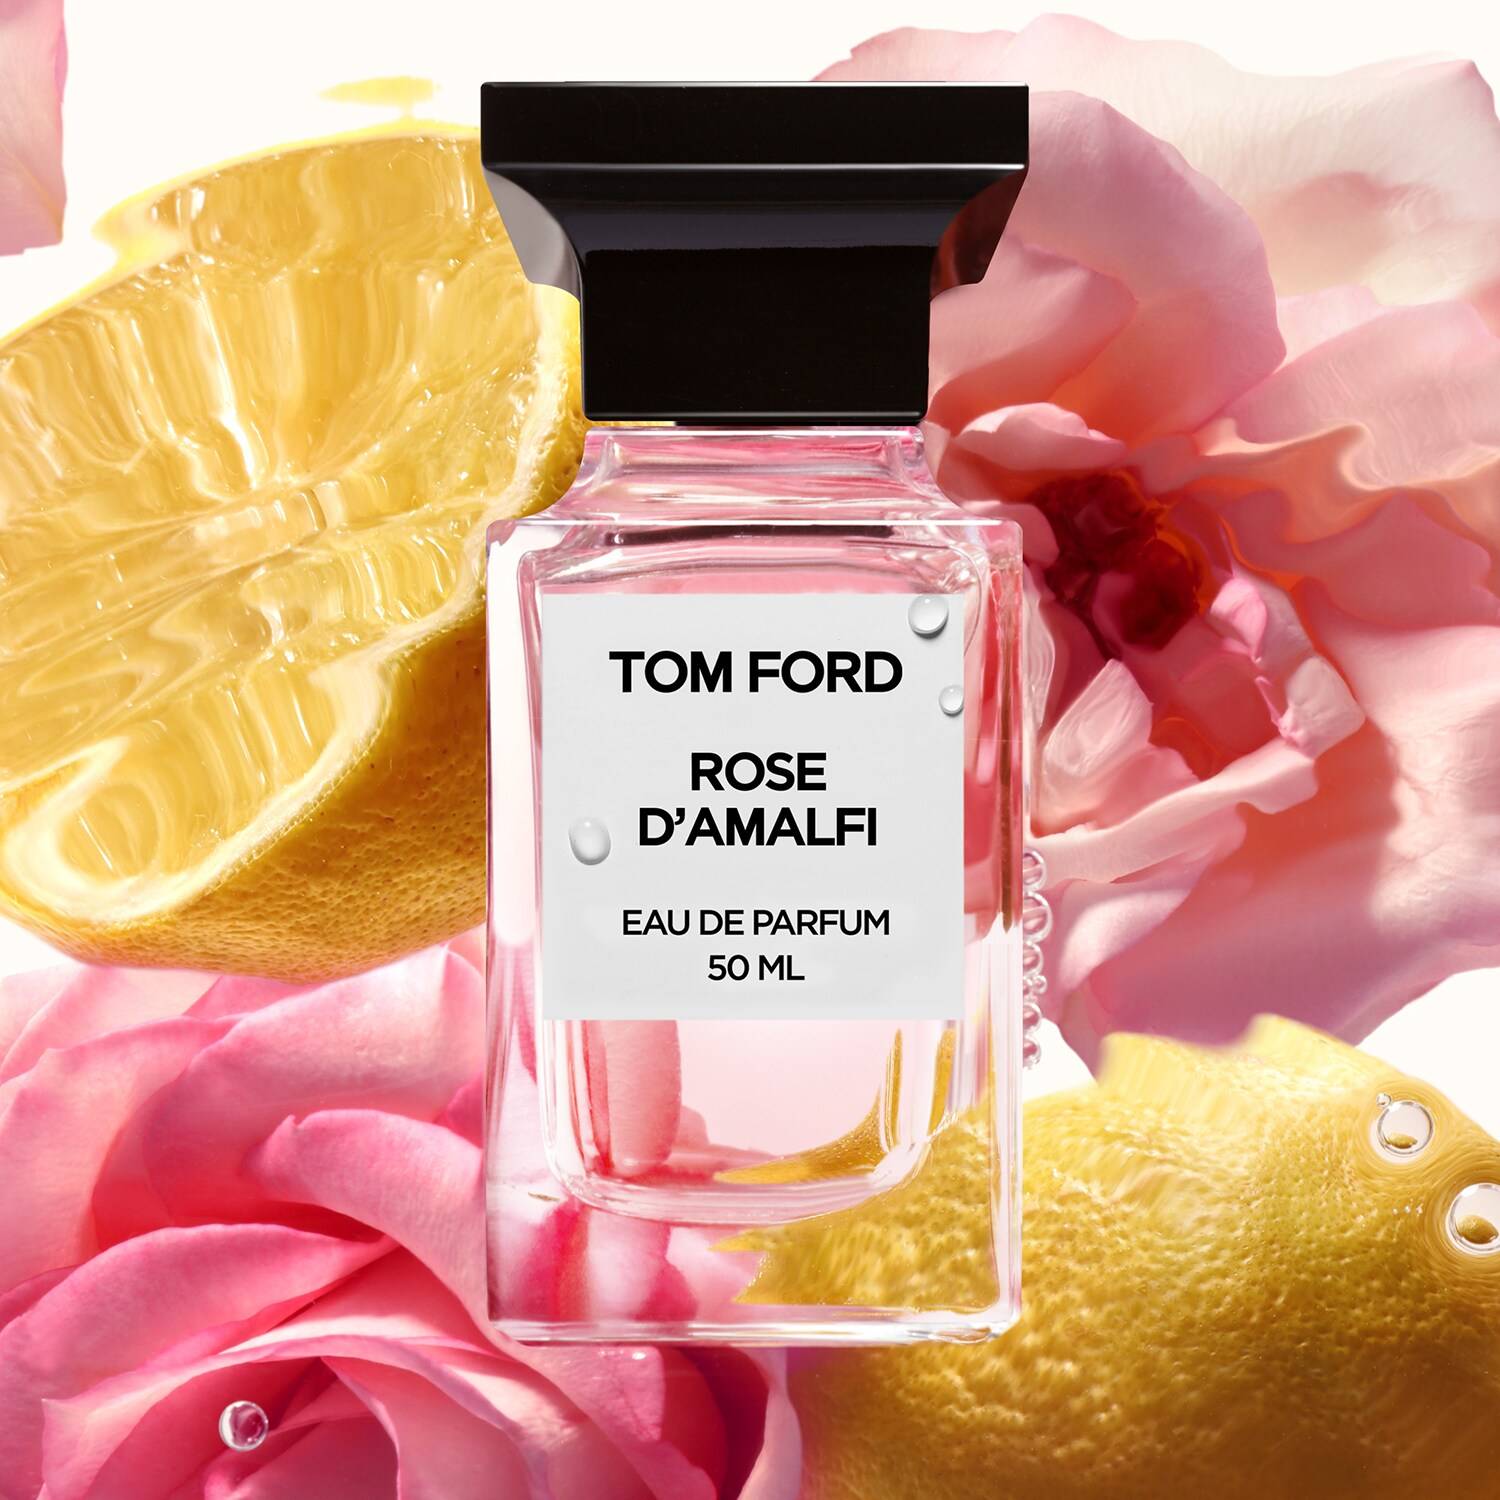 Tom Ford Rose D'Amalfi Eau de Parfum 50ml | SEPHORA UK